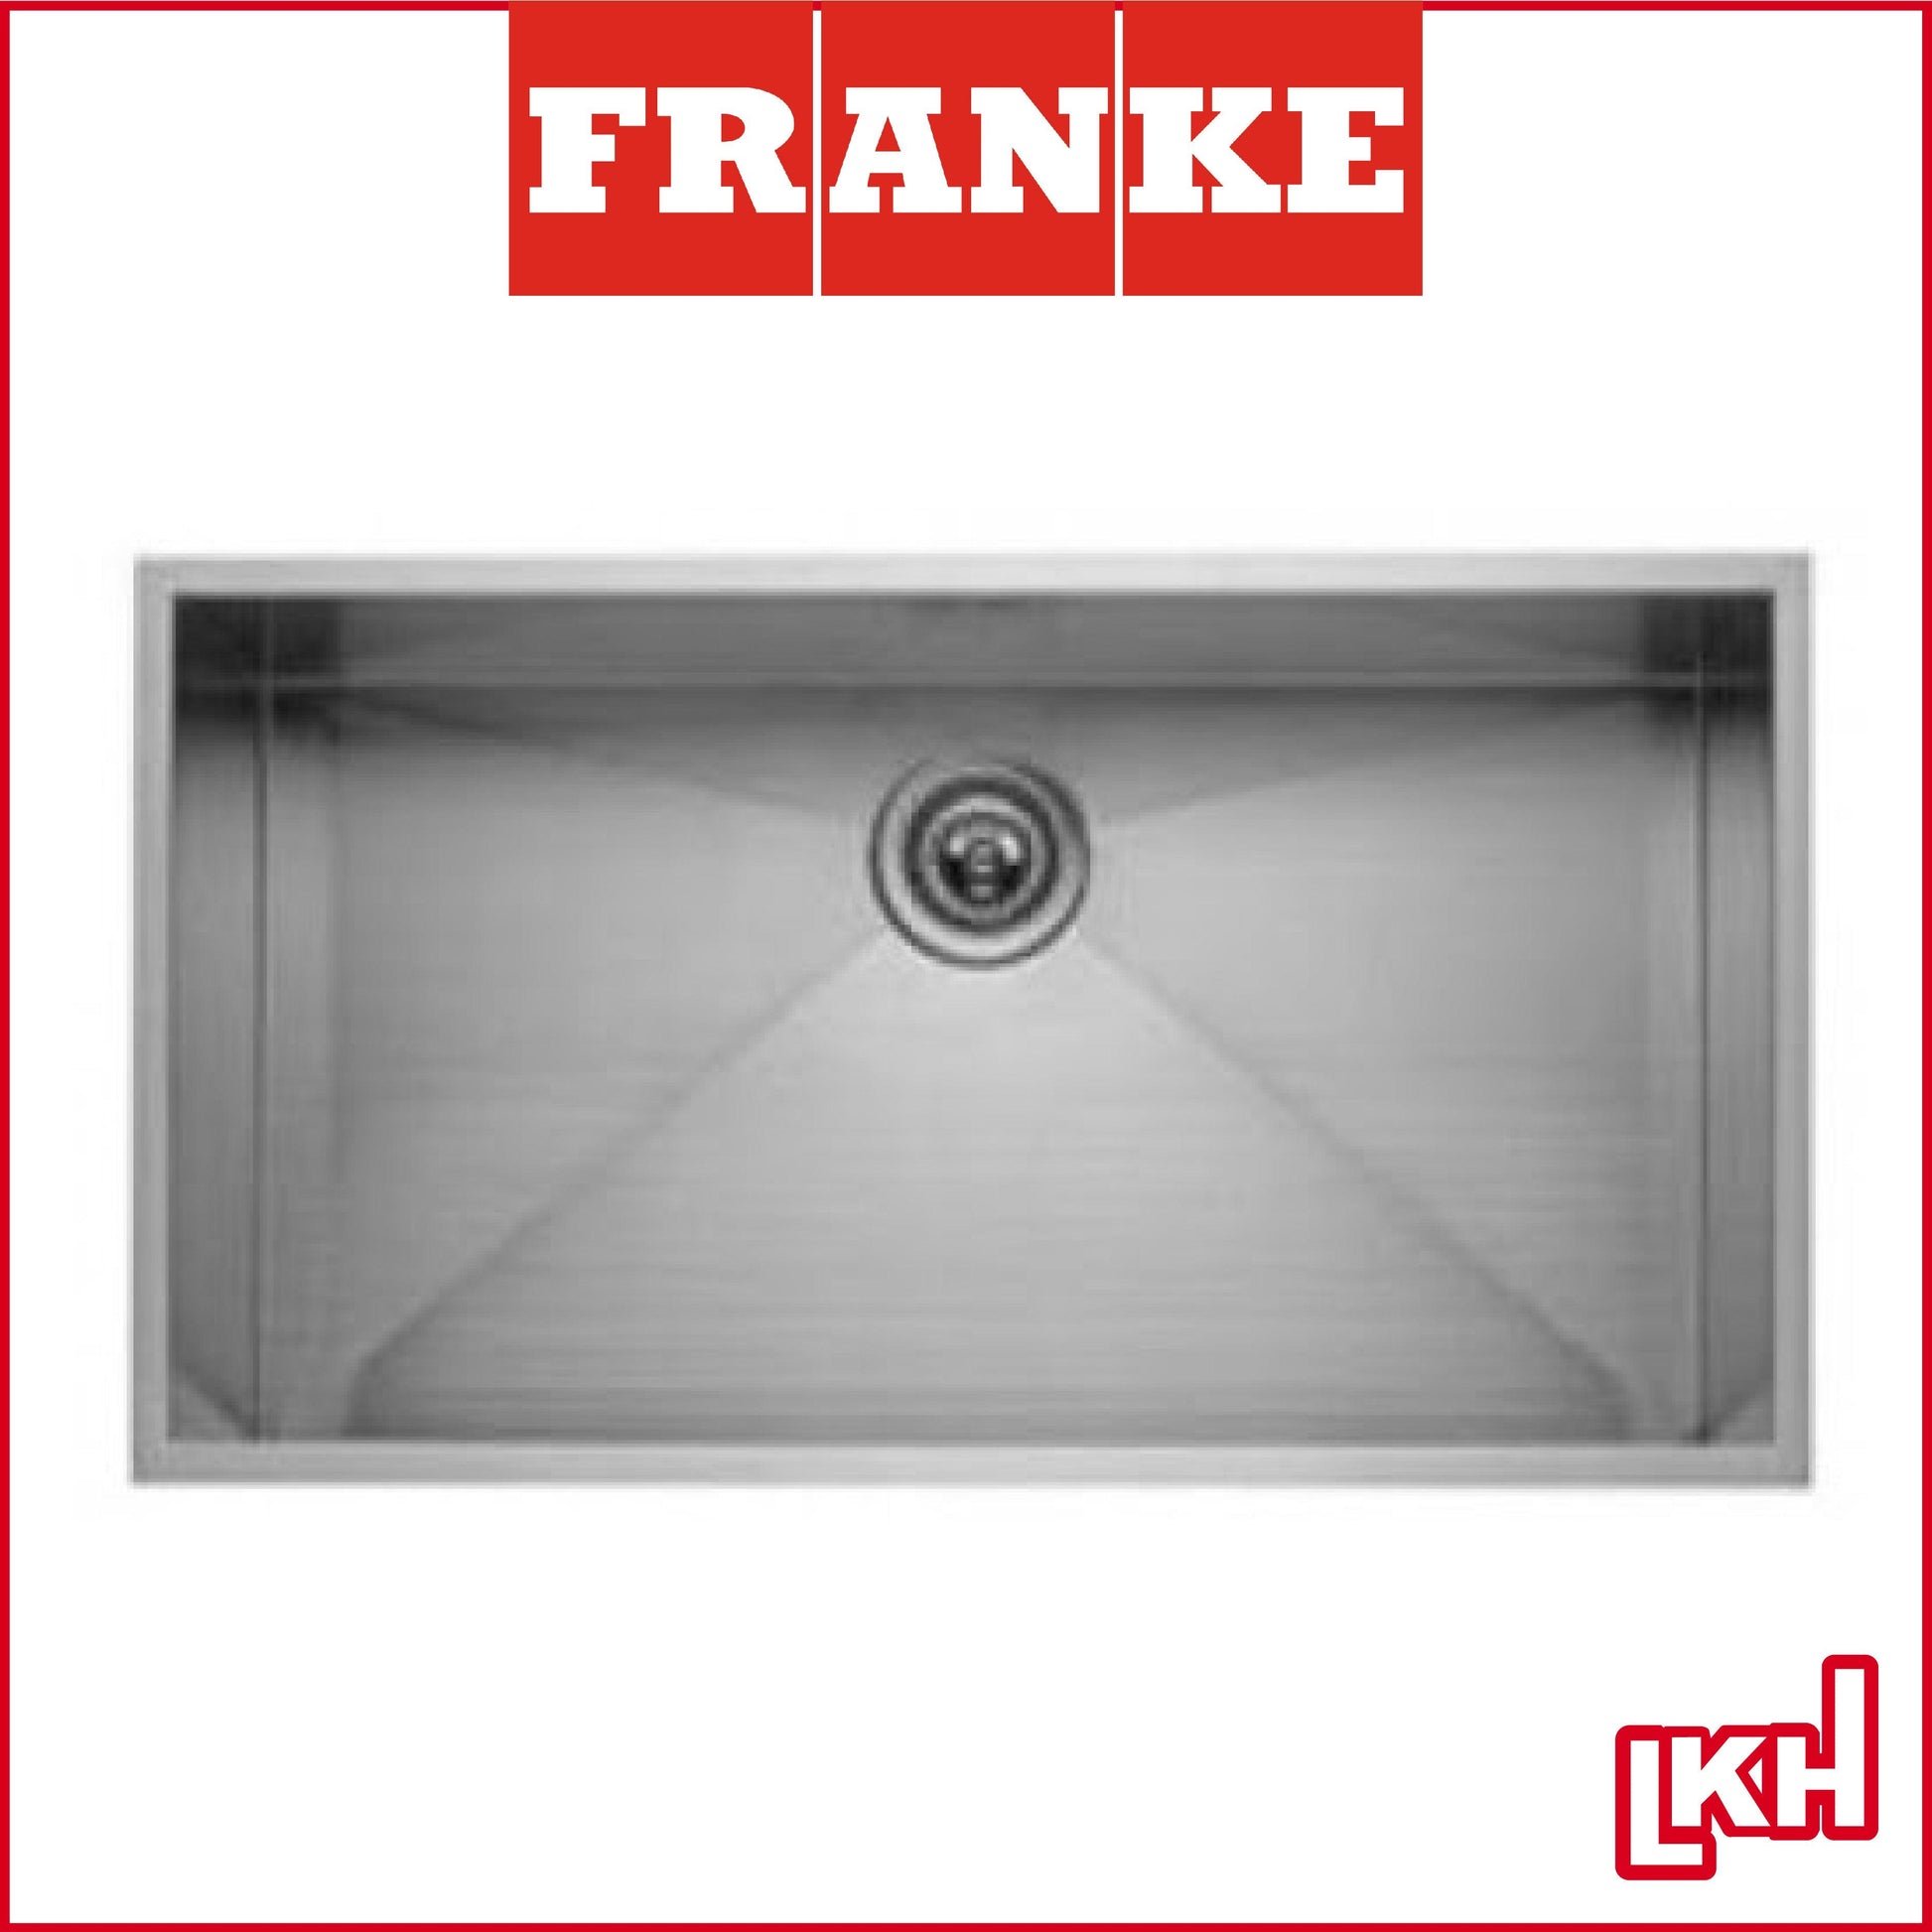 franke PZX 110-79 stainless steel single bowl kitchen sink